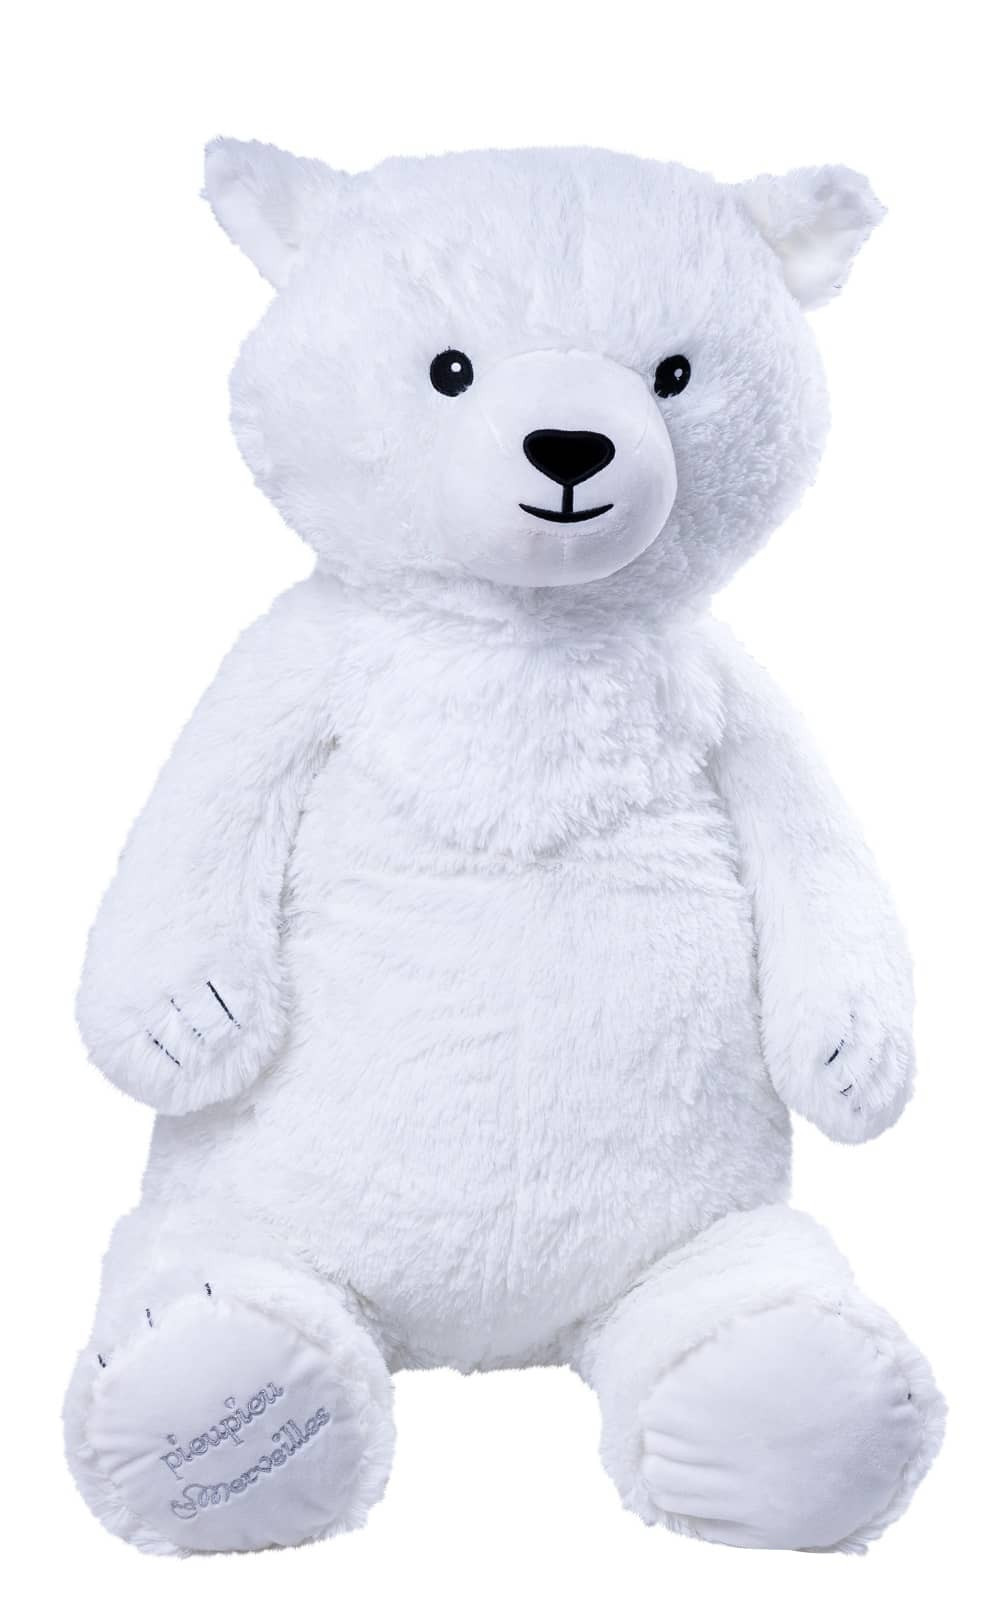 Peluche Made in France-Nanuq l'ours polaire géant-Ours en peluche